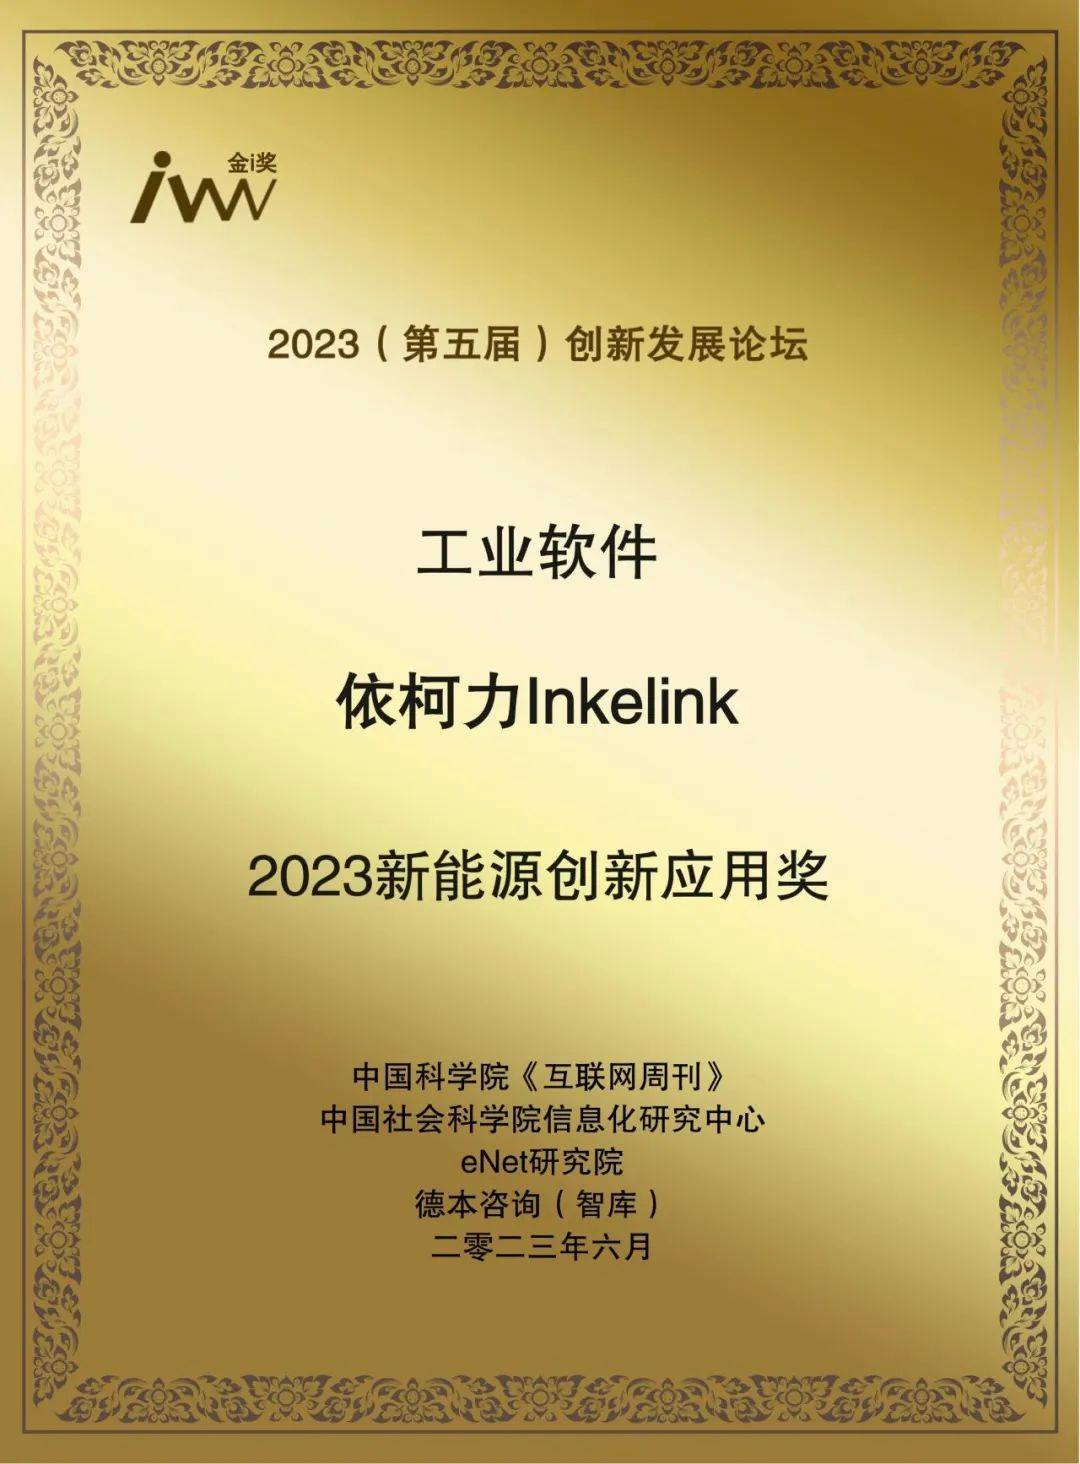 inkelink-nesw-2023072102